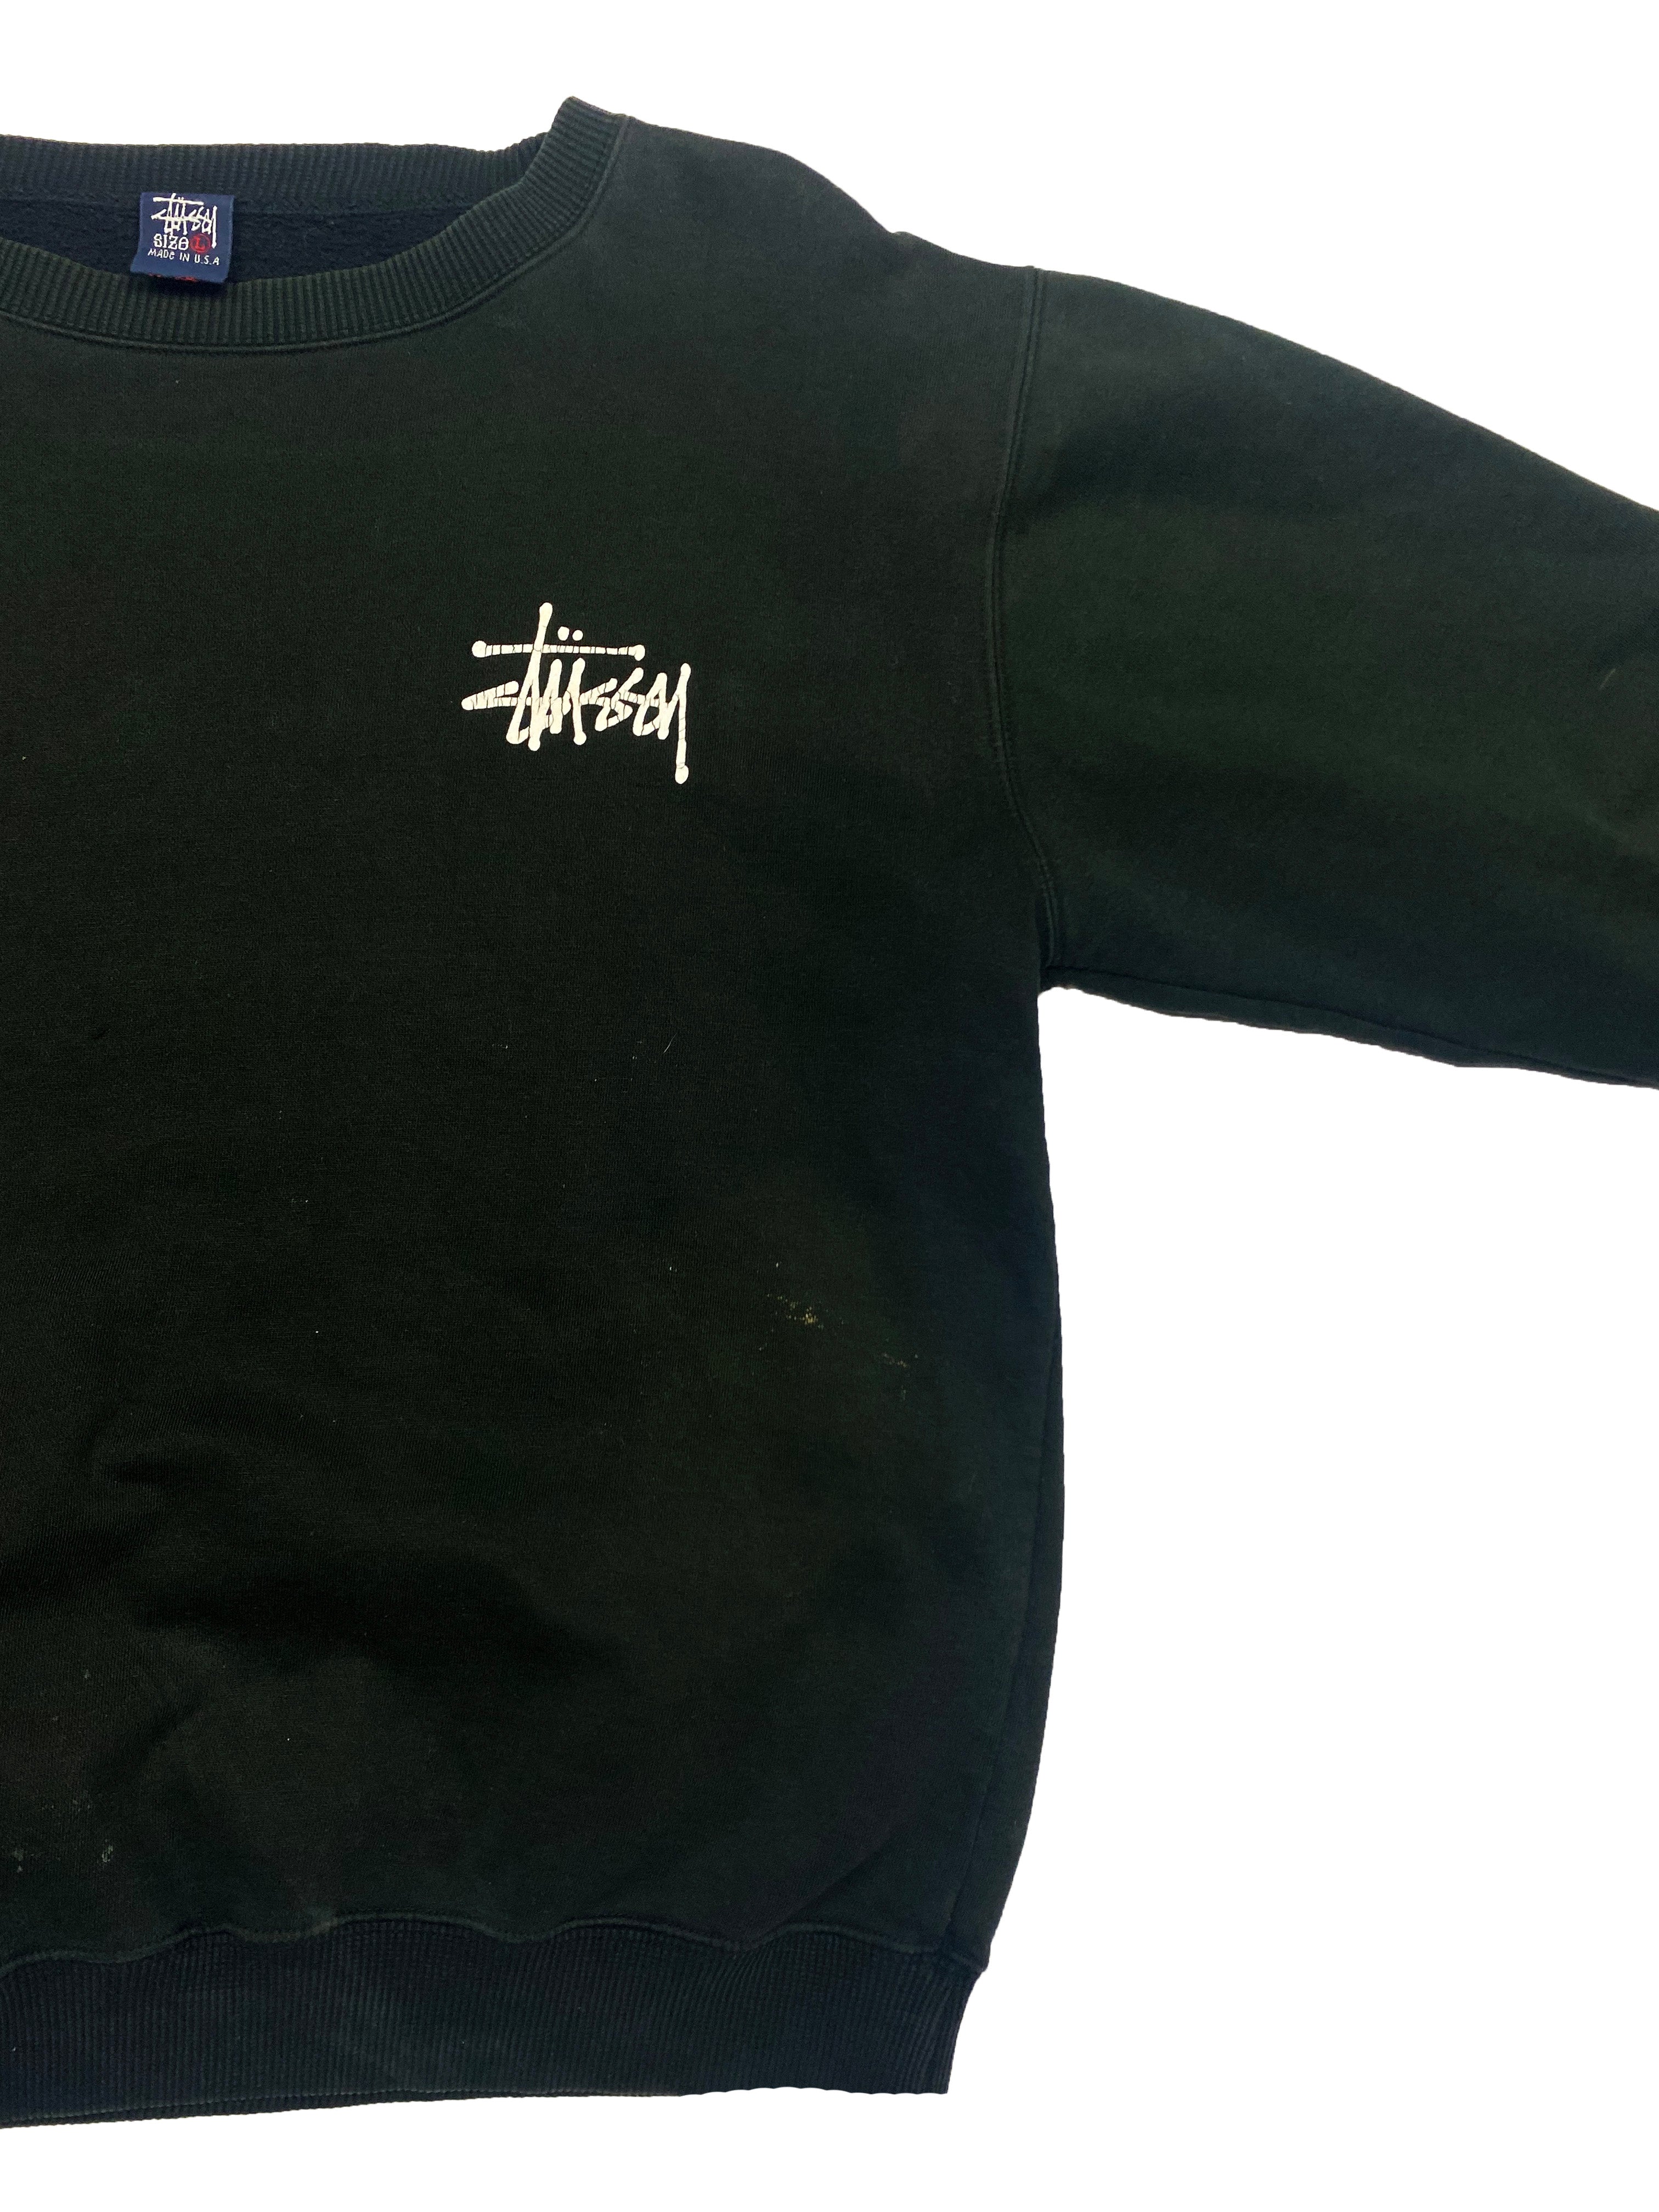 Stussy Black Dragon Sweatshirt 90's